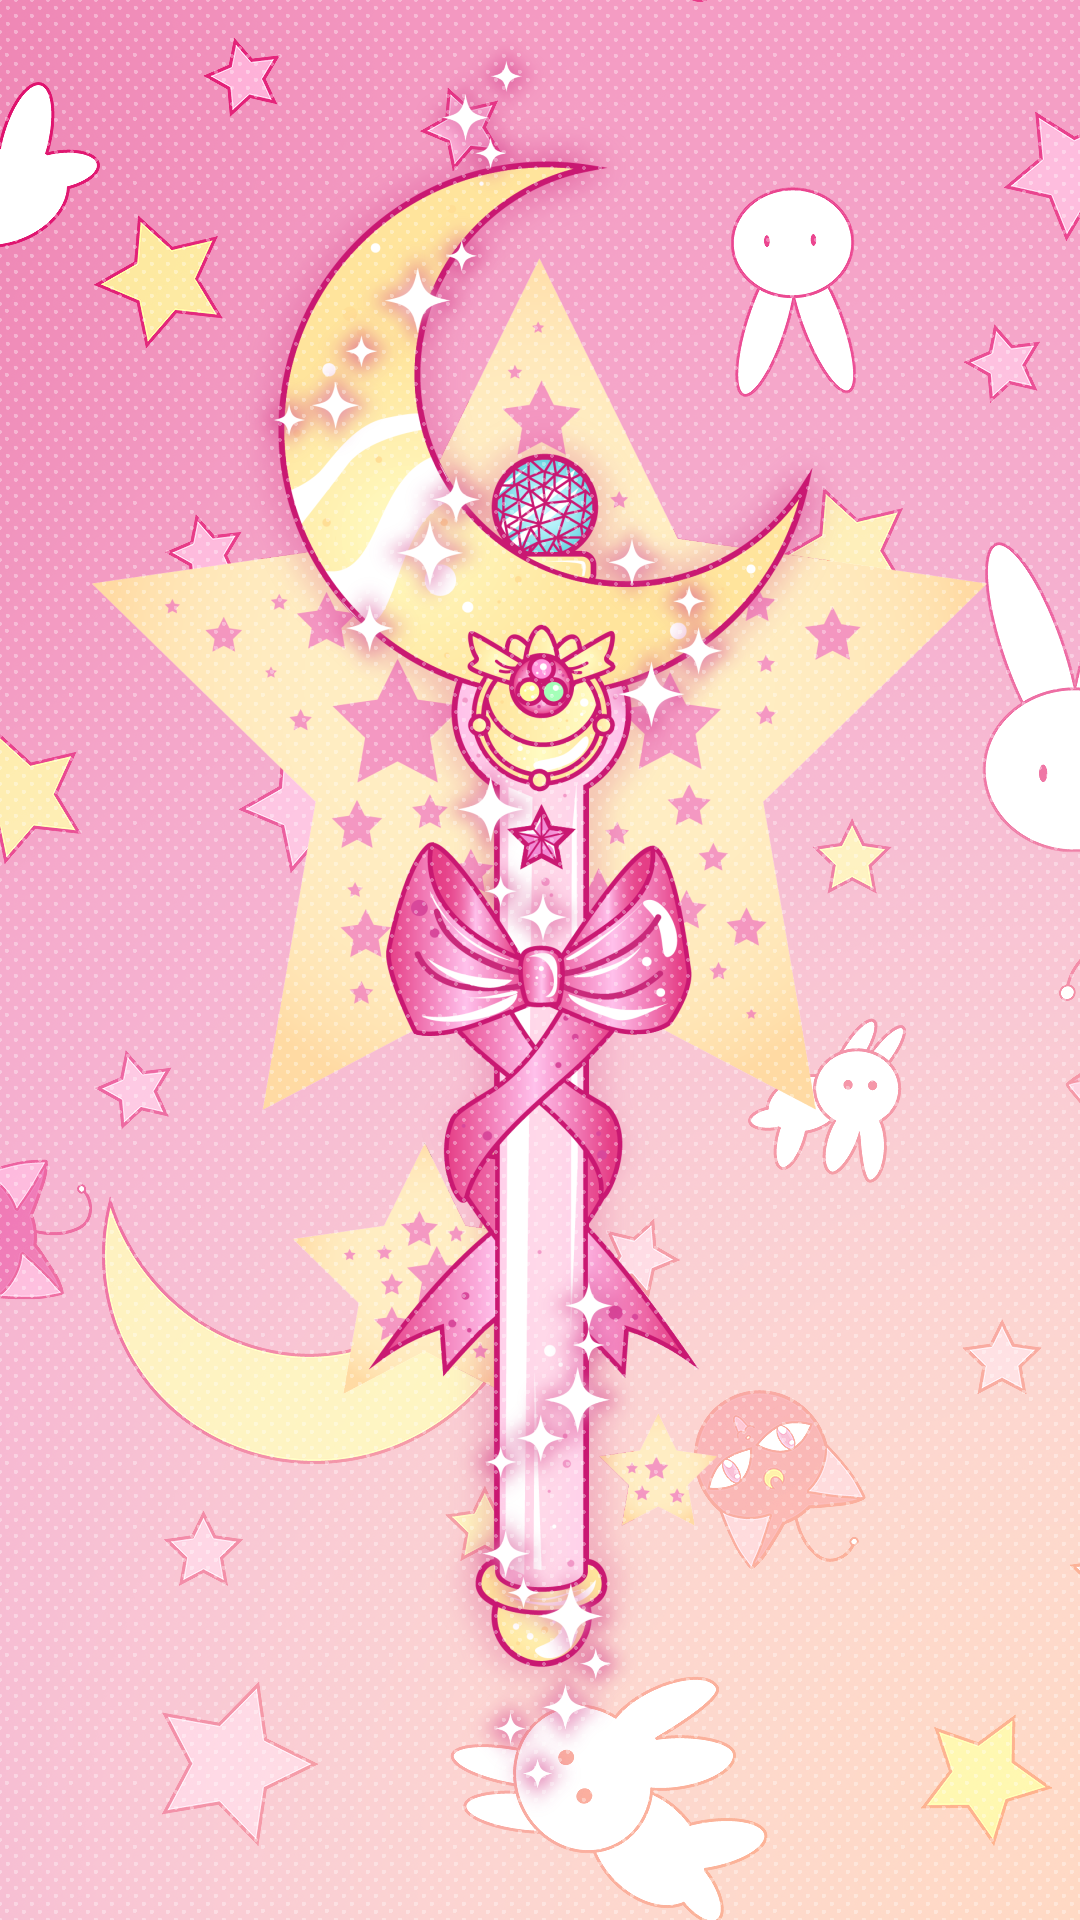 Sailor moon cute pink wallpaper 1080 x 1920 HD (anime, otaku, magical girl, magic wand, star). Sailor moon wallpaper, Sailor moon fan art, Sailor moon usagi